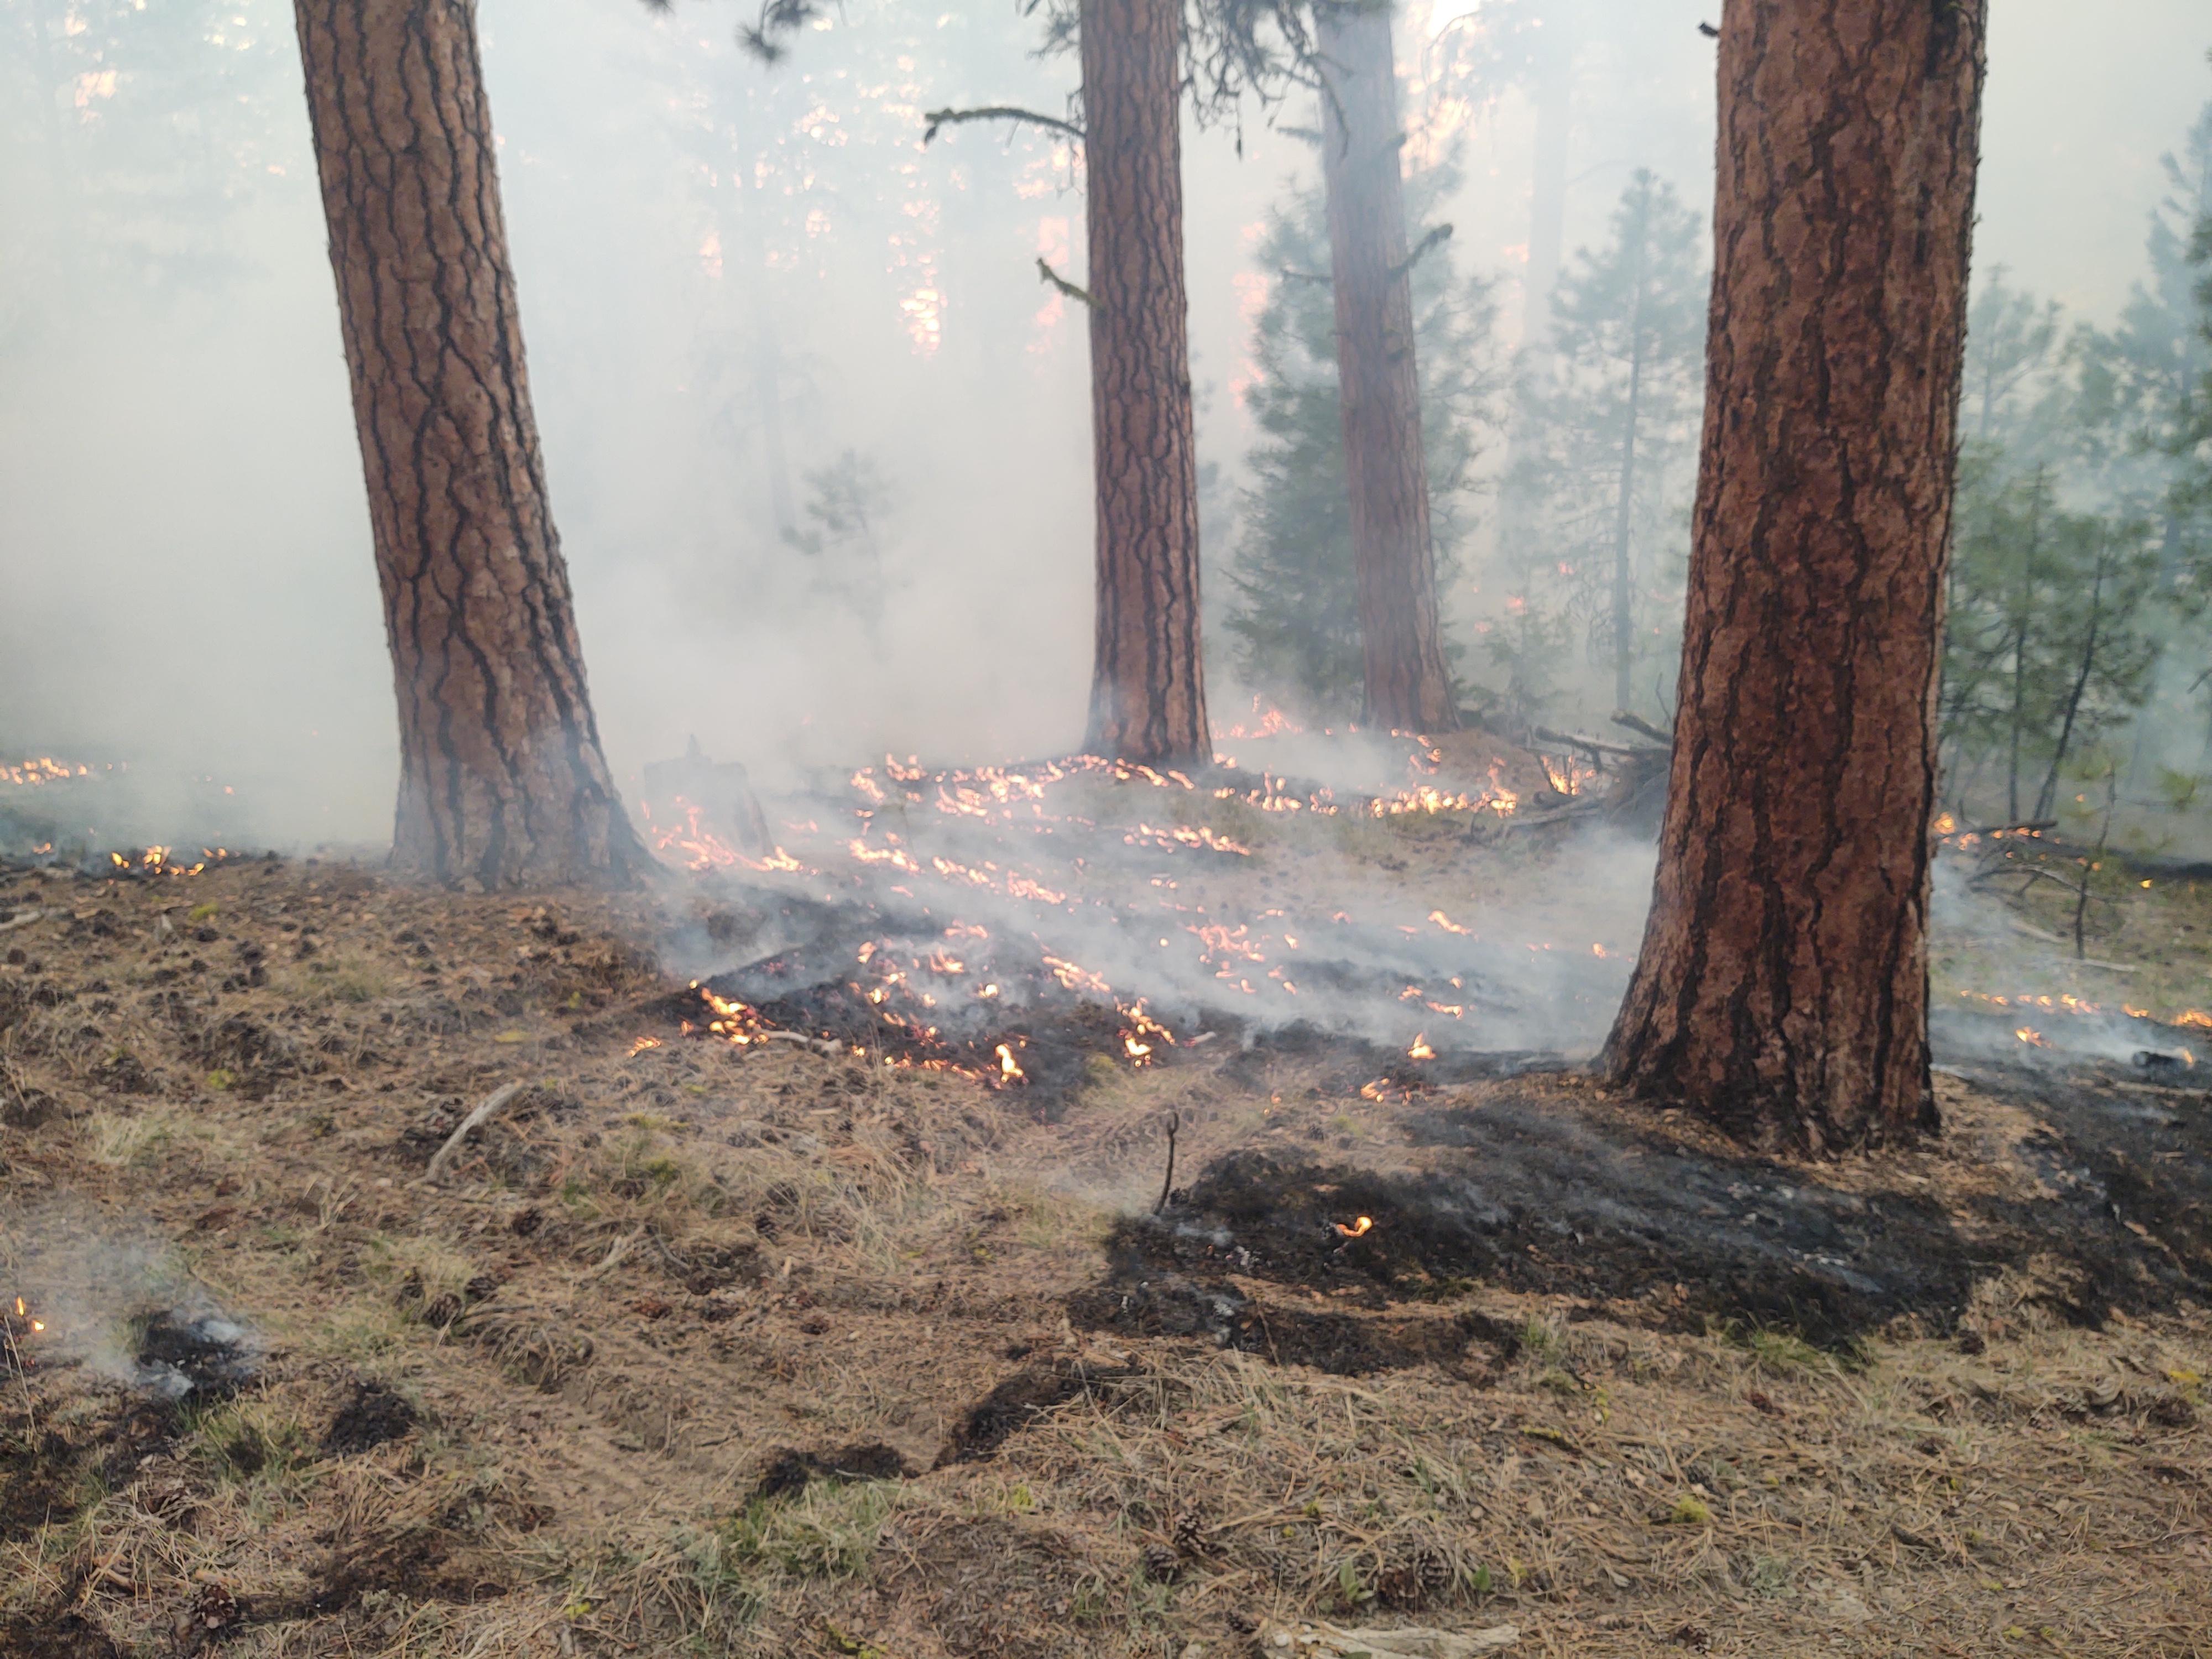 Low burning flame, near the ground amongst Ponderosa Pine trees. 